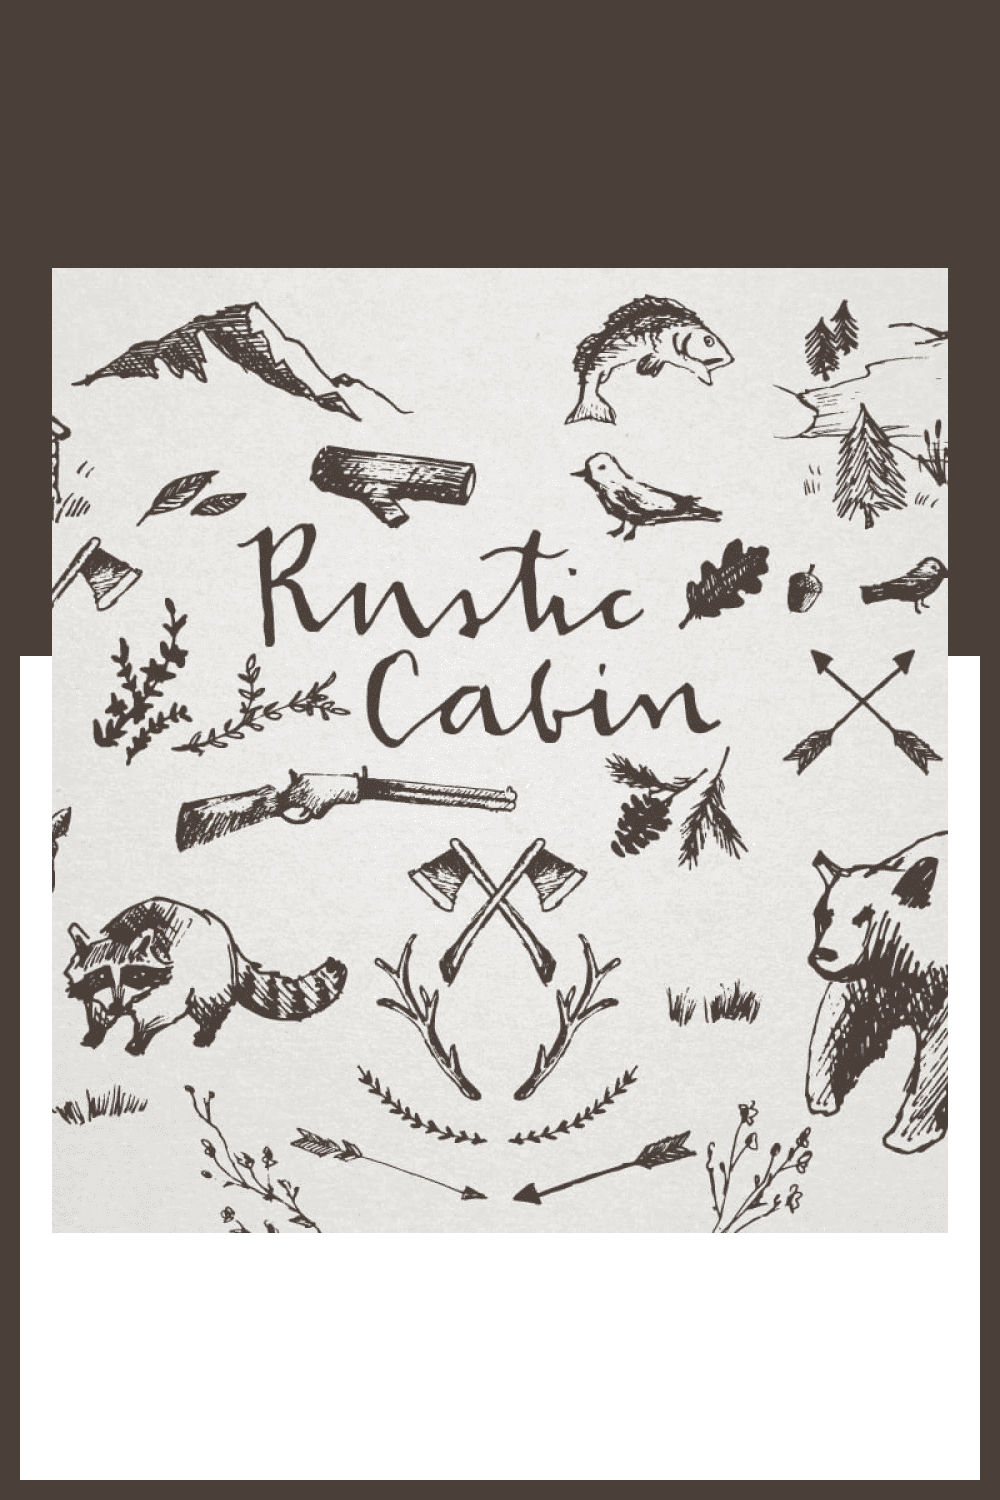 37 Rustic Cabin Crosshatch Sketches - MasterBundles - Pinterest Collage Image.